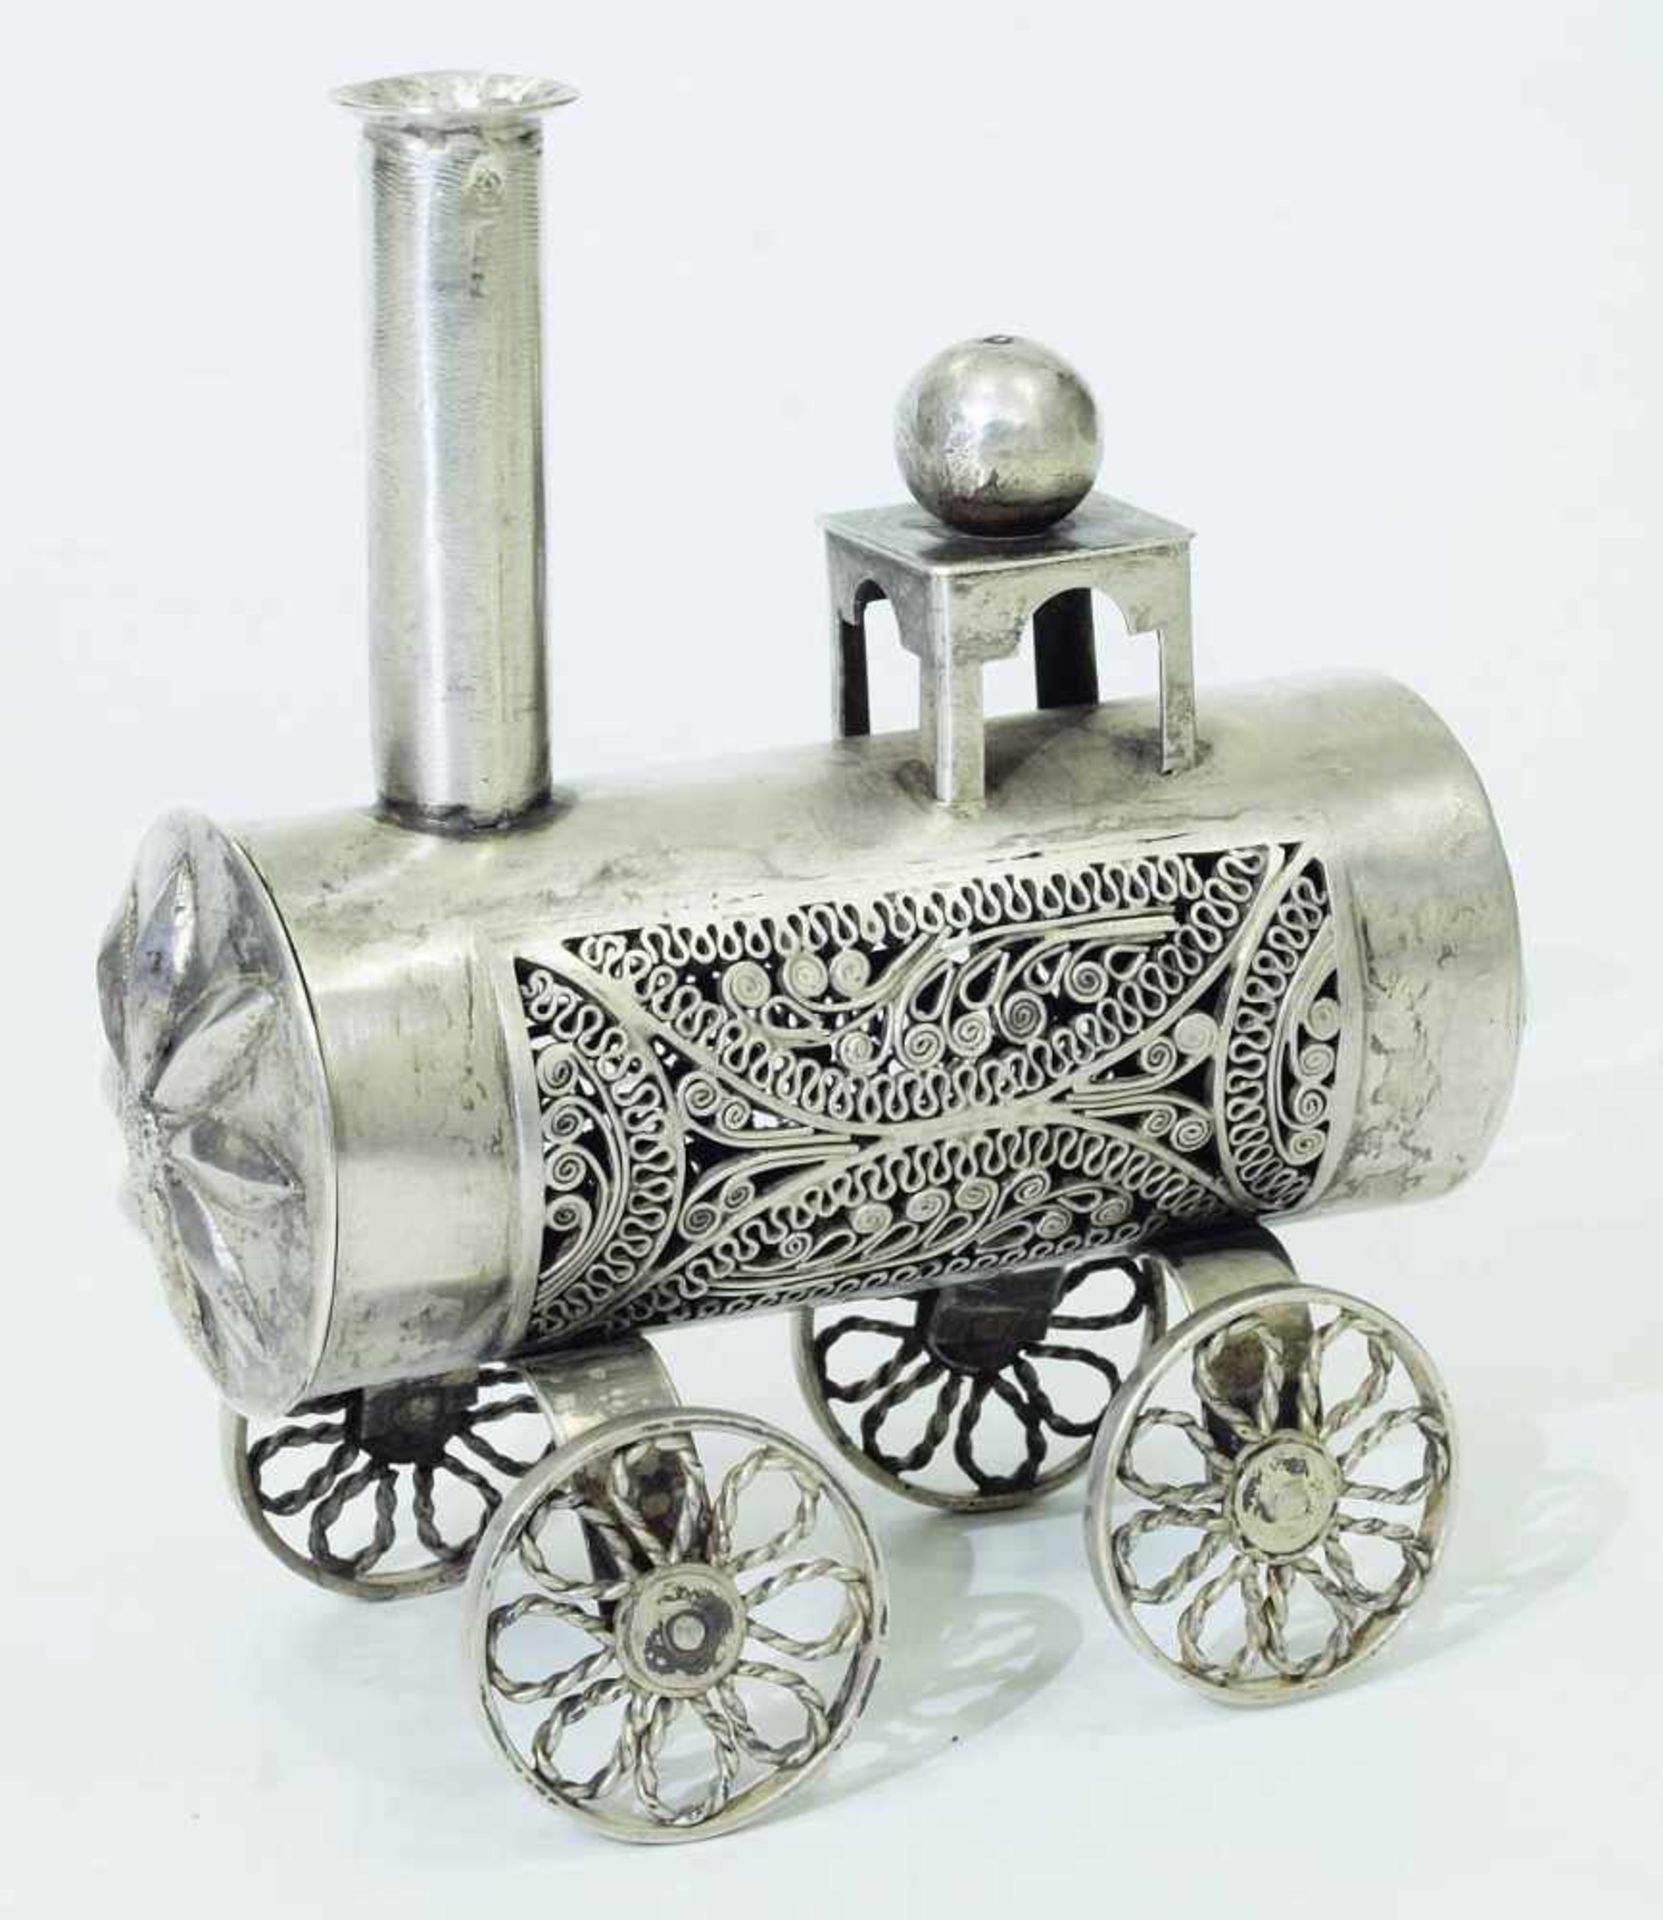 Stilisierte Lokomotive.Stilisierte Lokomotive. 19. Jahrhundert, 12-lötiges Silber punziert. - Image 2 of 4